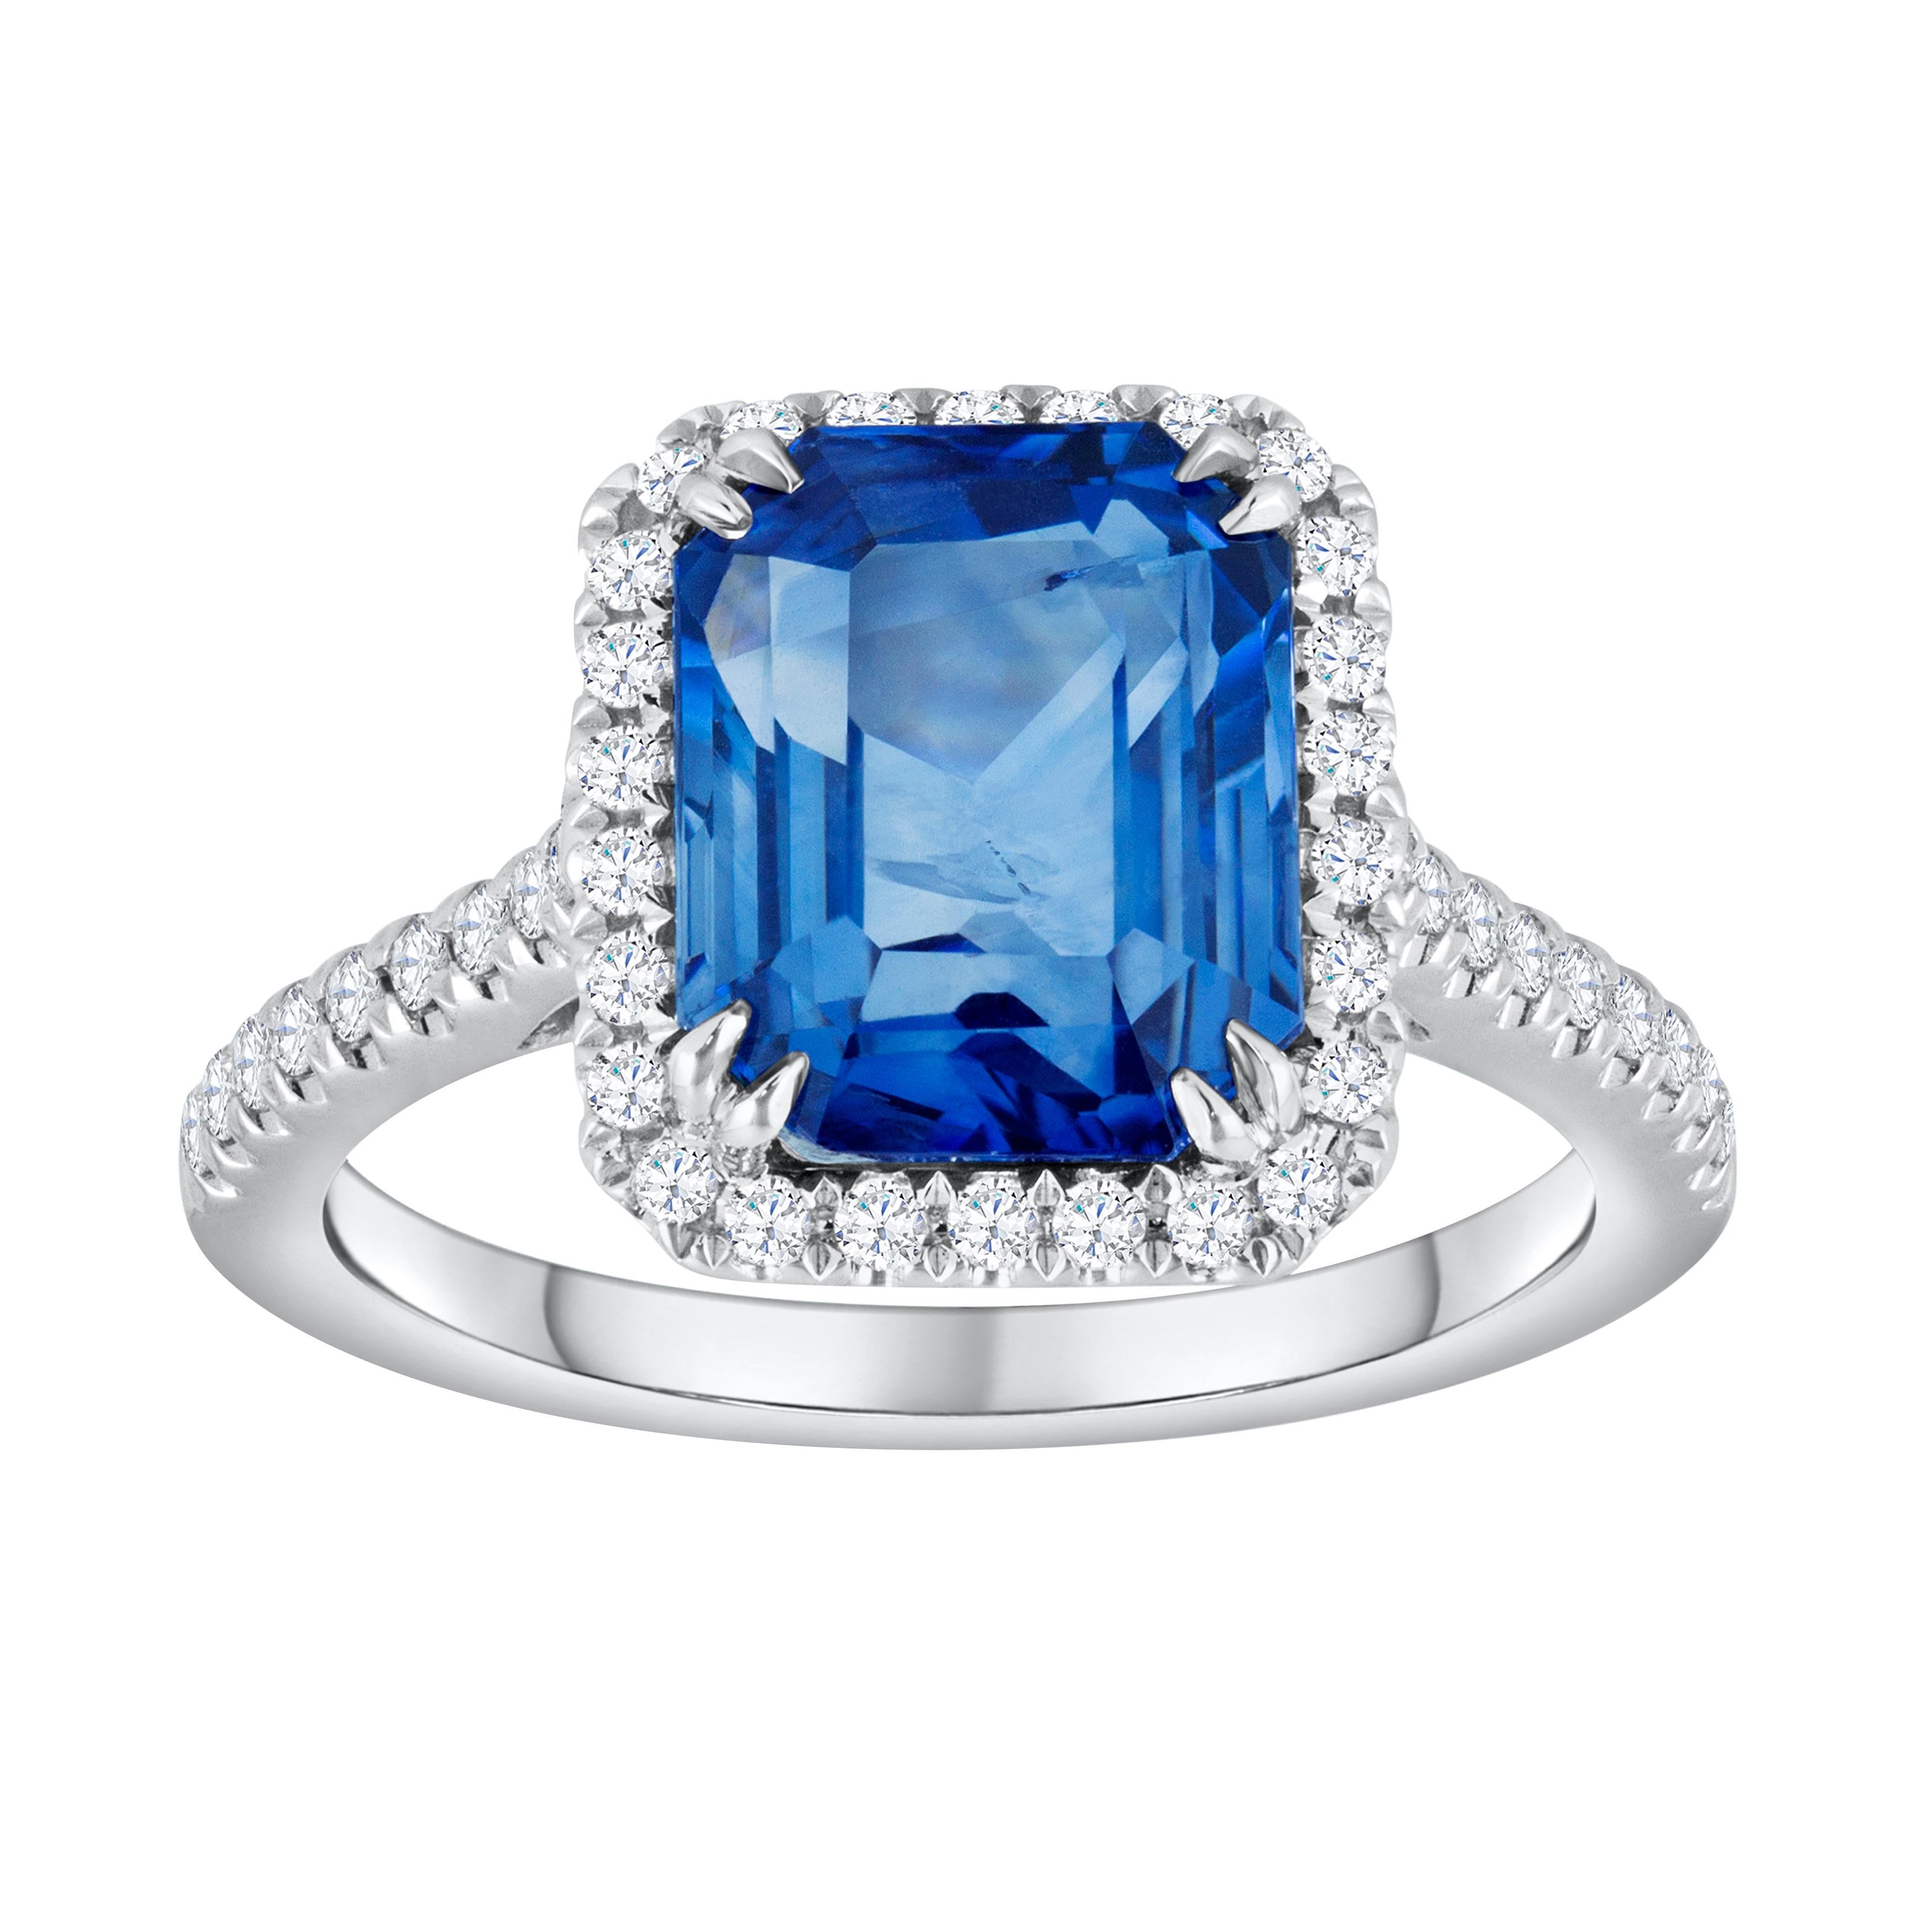 Roman Malakov 4.88 Carats Emerald Cut Blue Sapphire Halo Engagement Ring